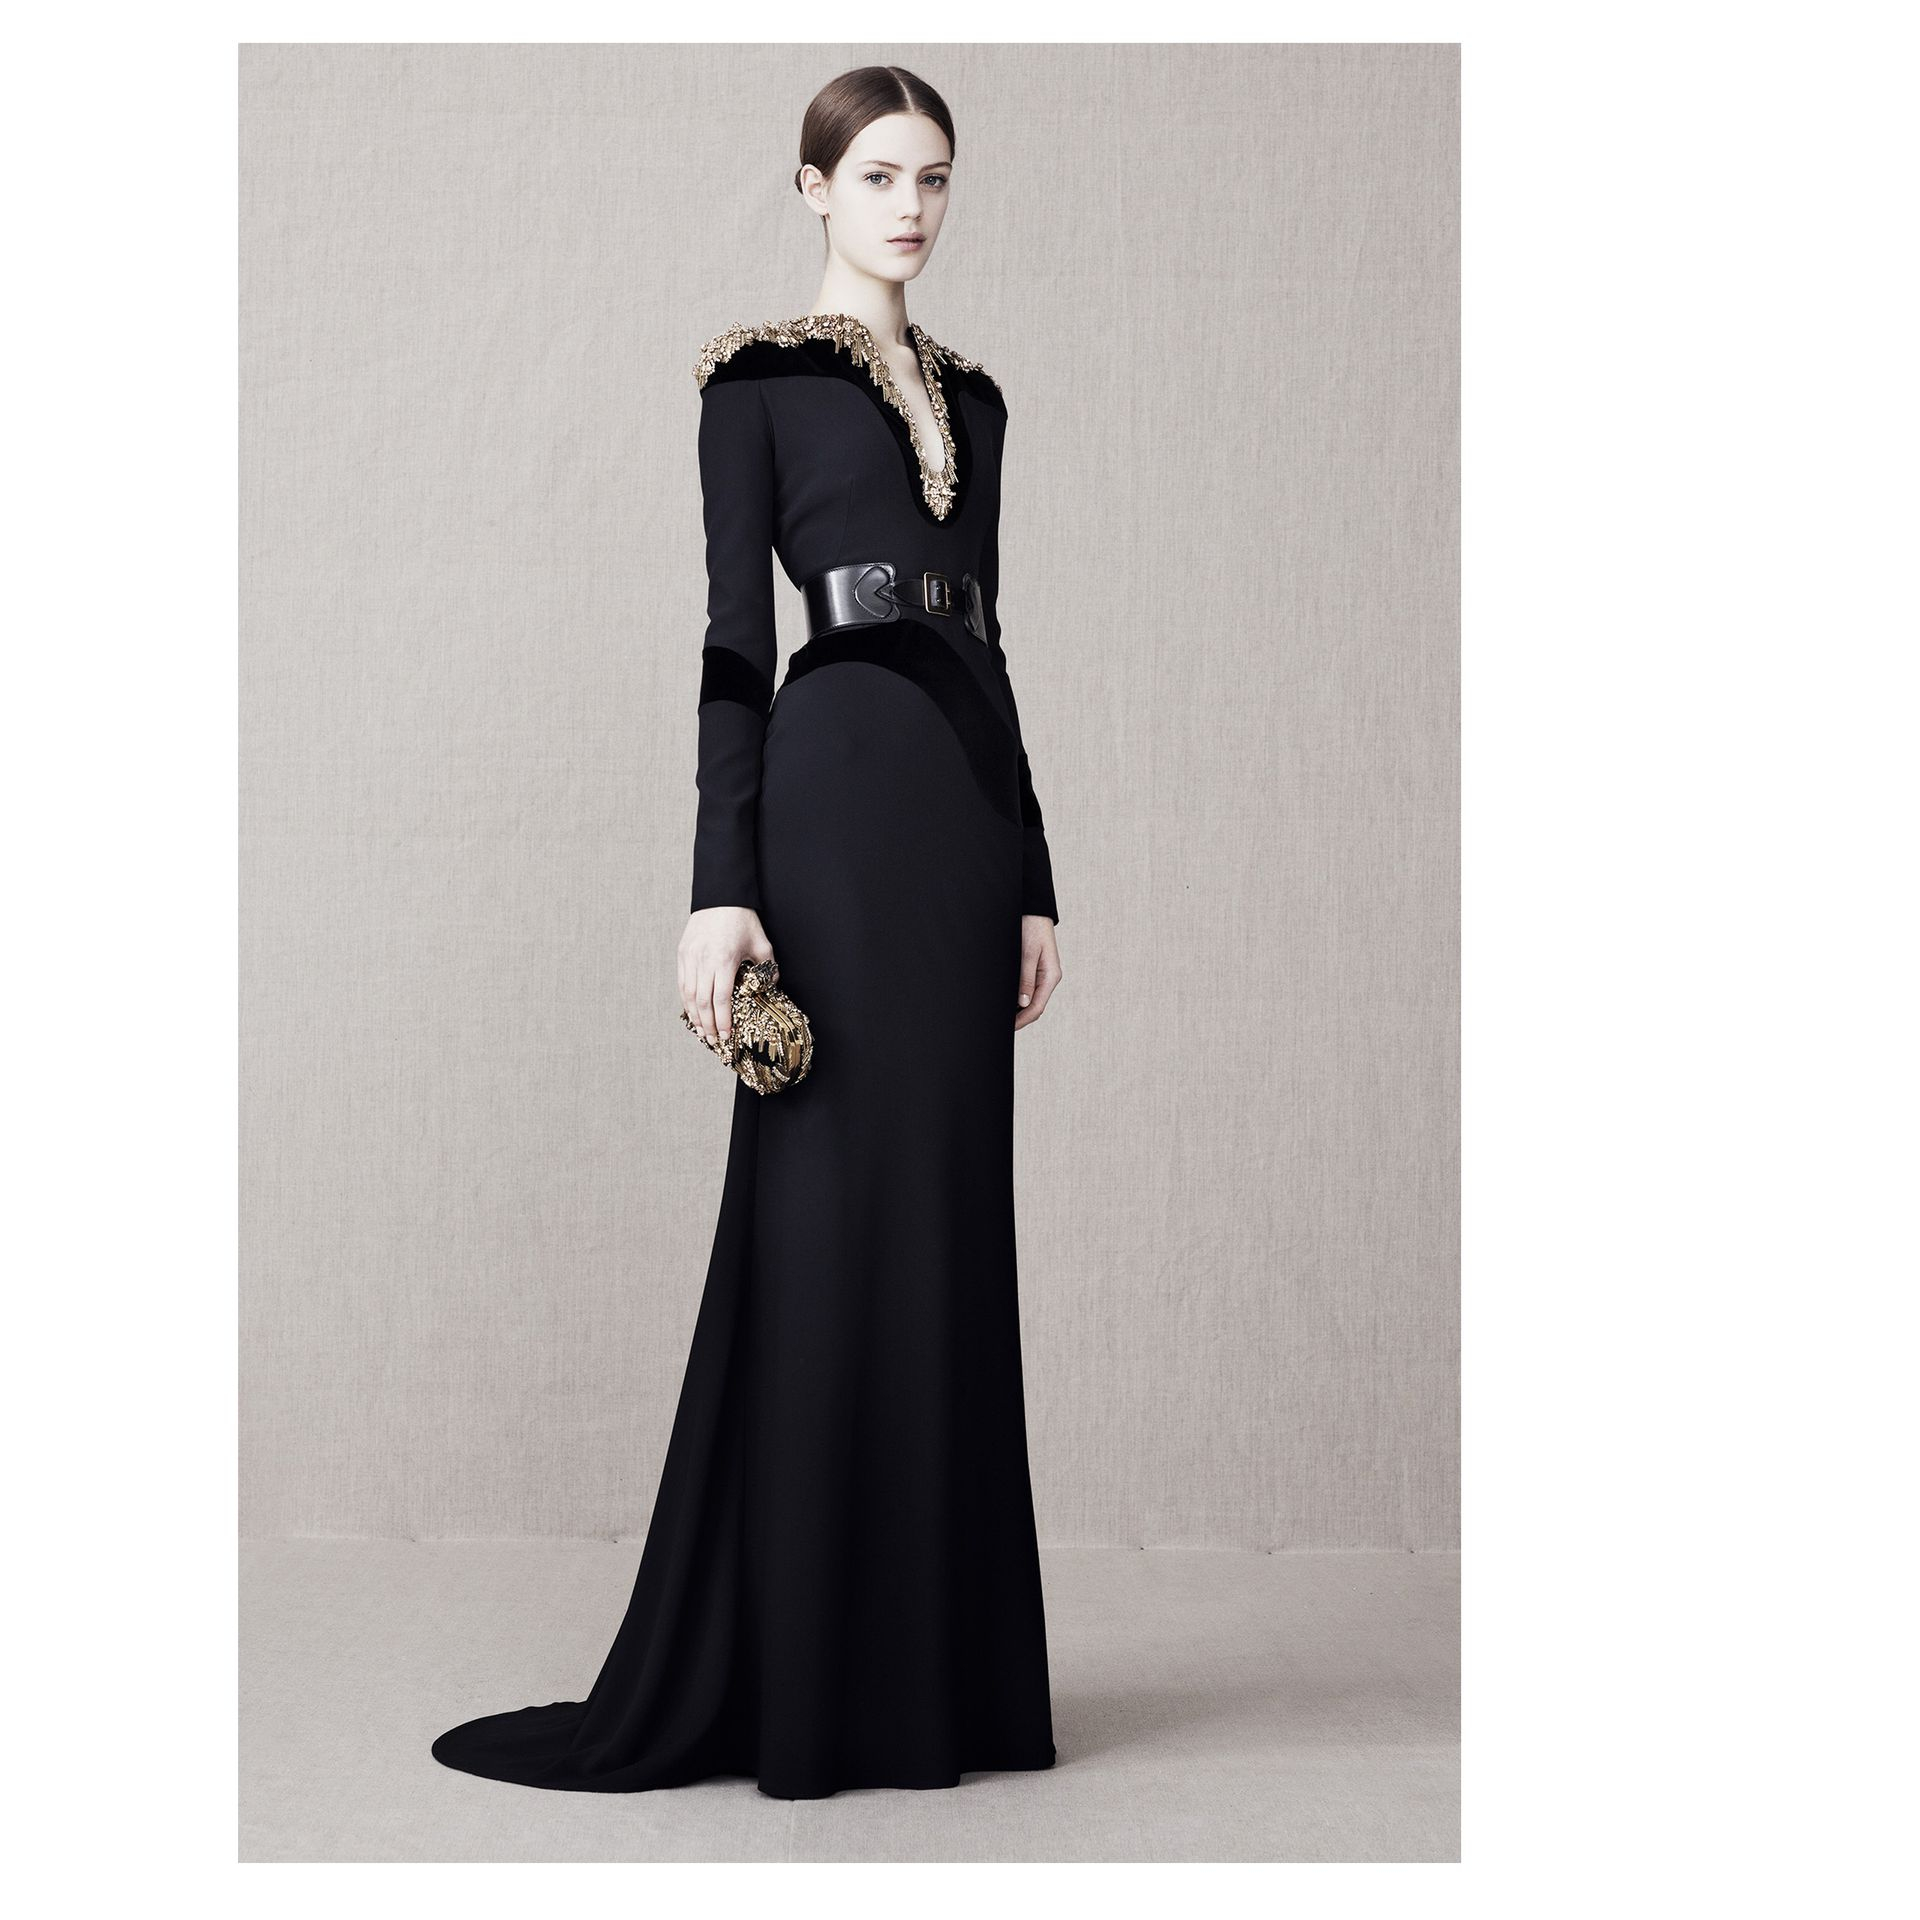 Lyst - Alexander Mcqueen Glory Embellished Floor Length Gown in Black